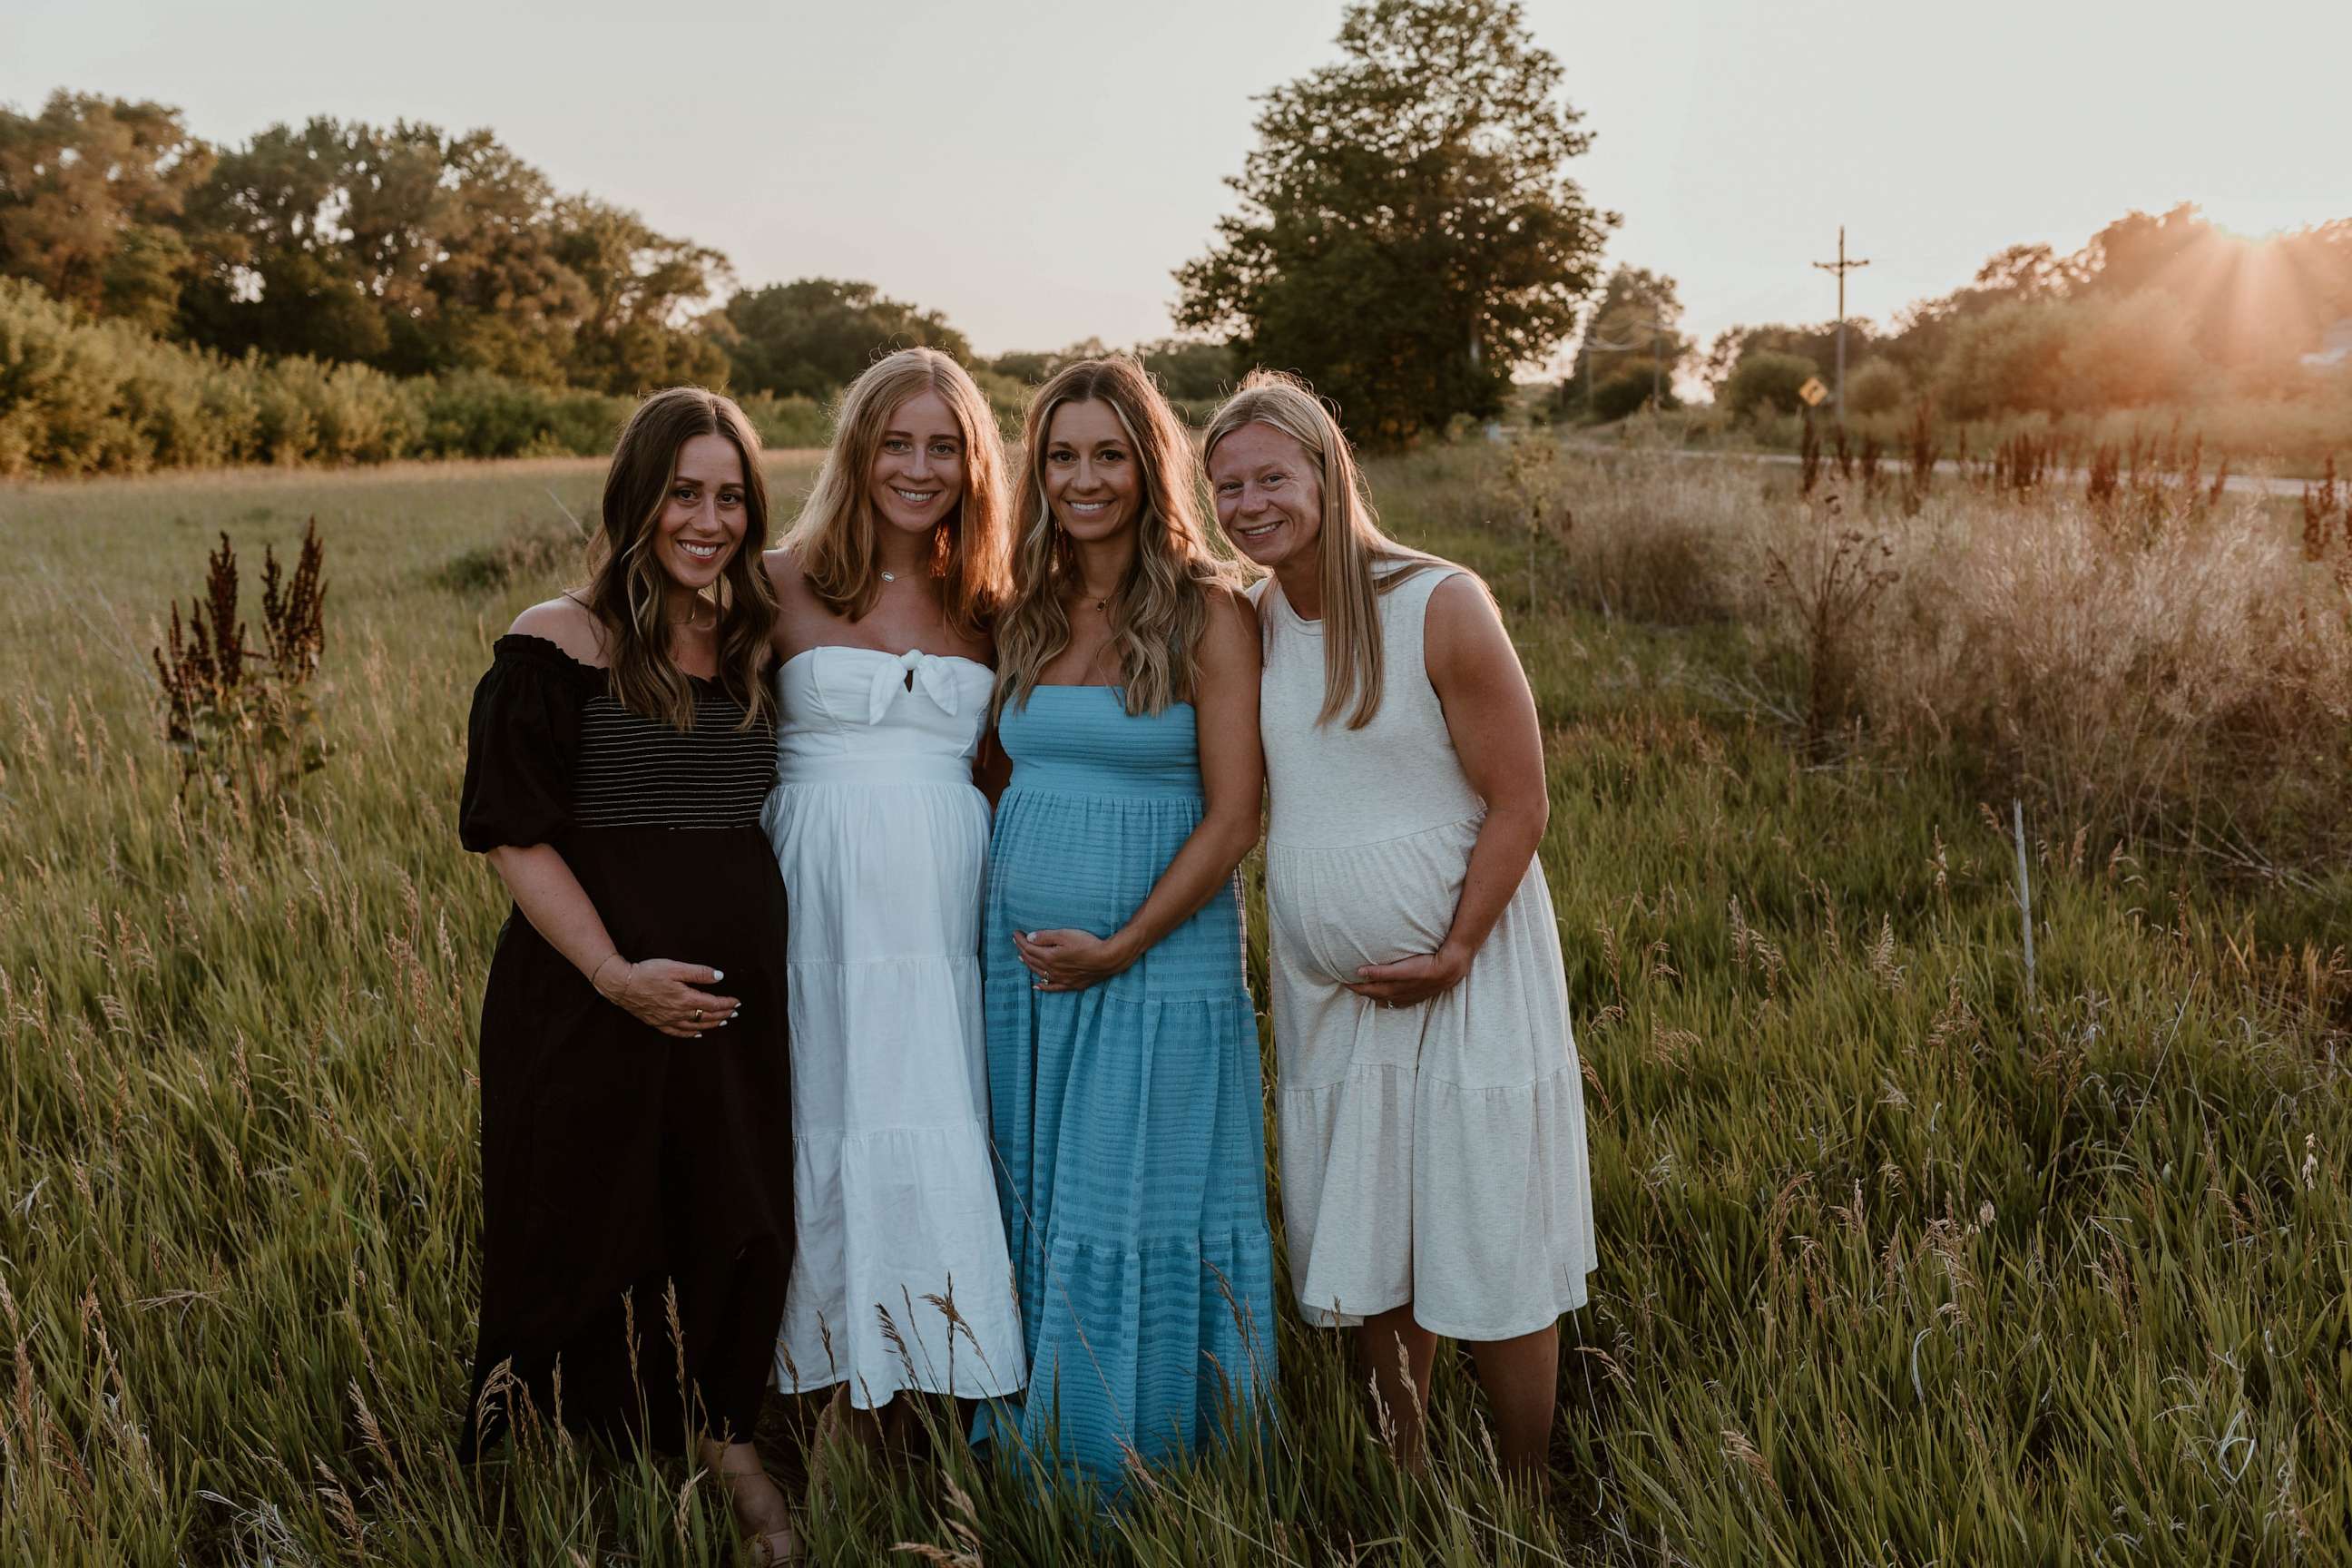 Jessica Gown  Pregnancy photos, Outdoor maternity photos